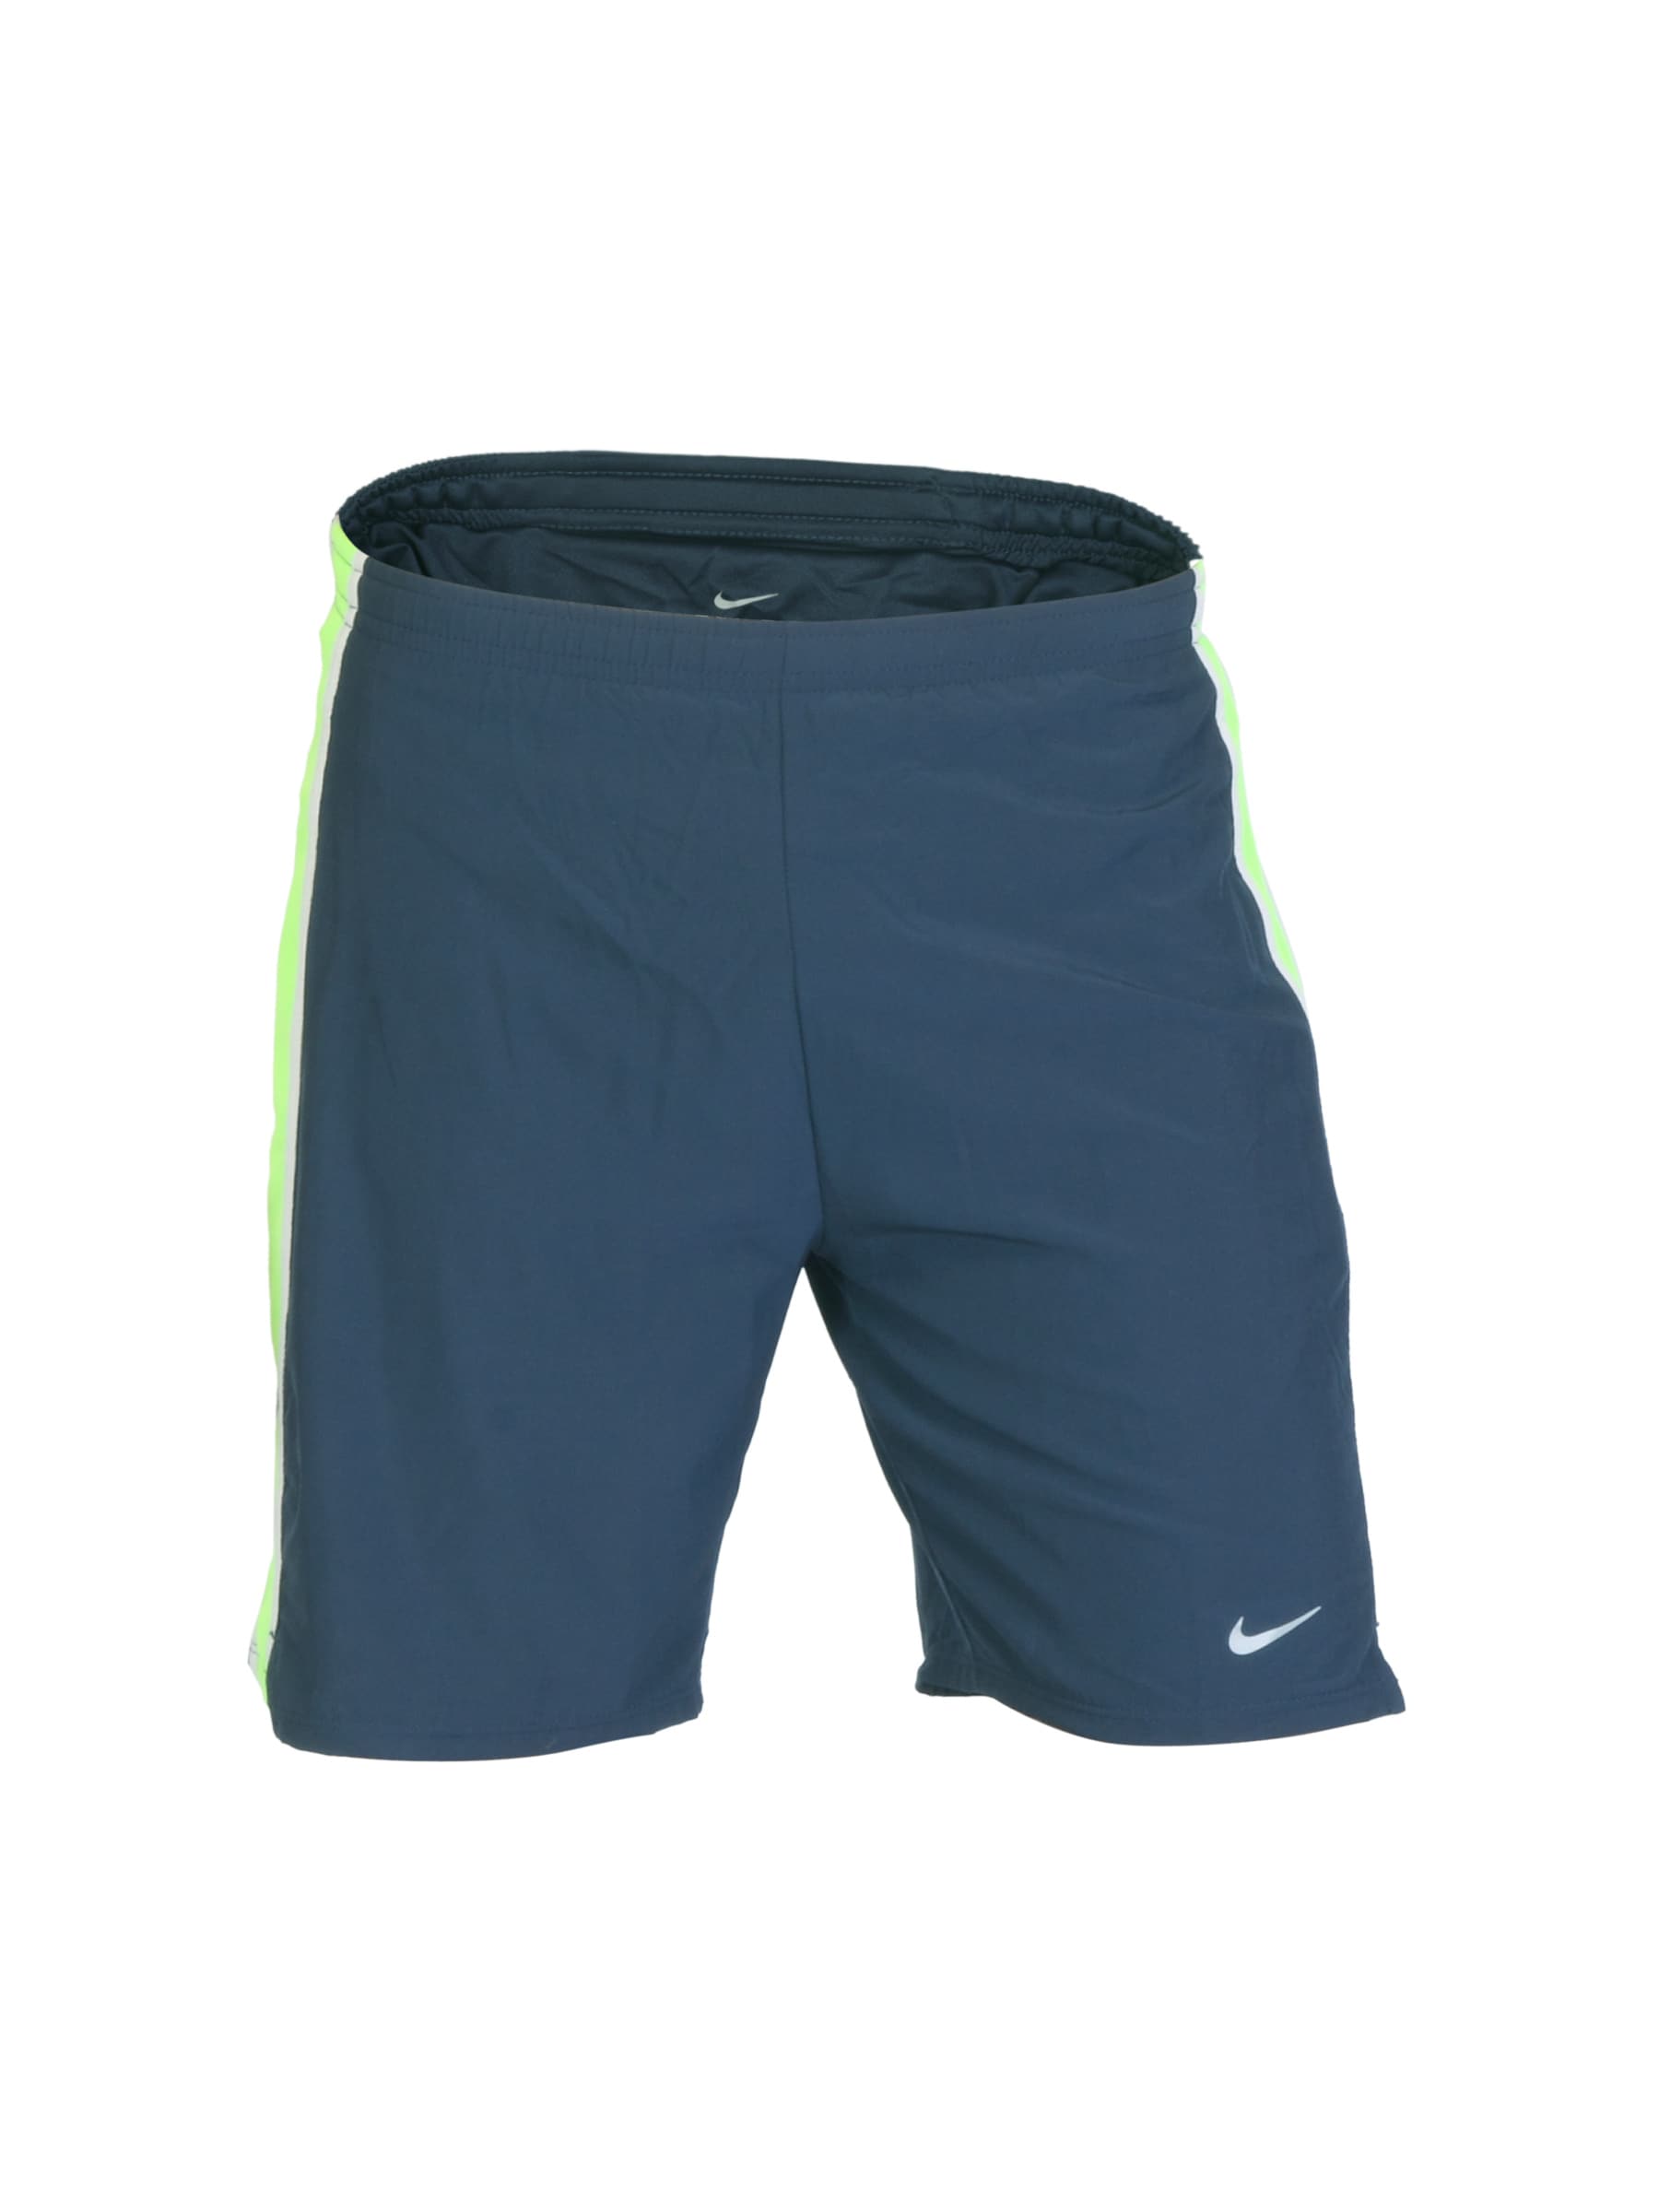 Nike Men Running Navy Blue Shorts